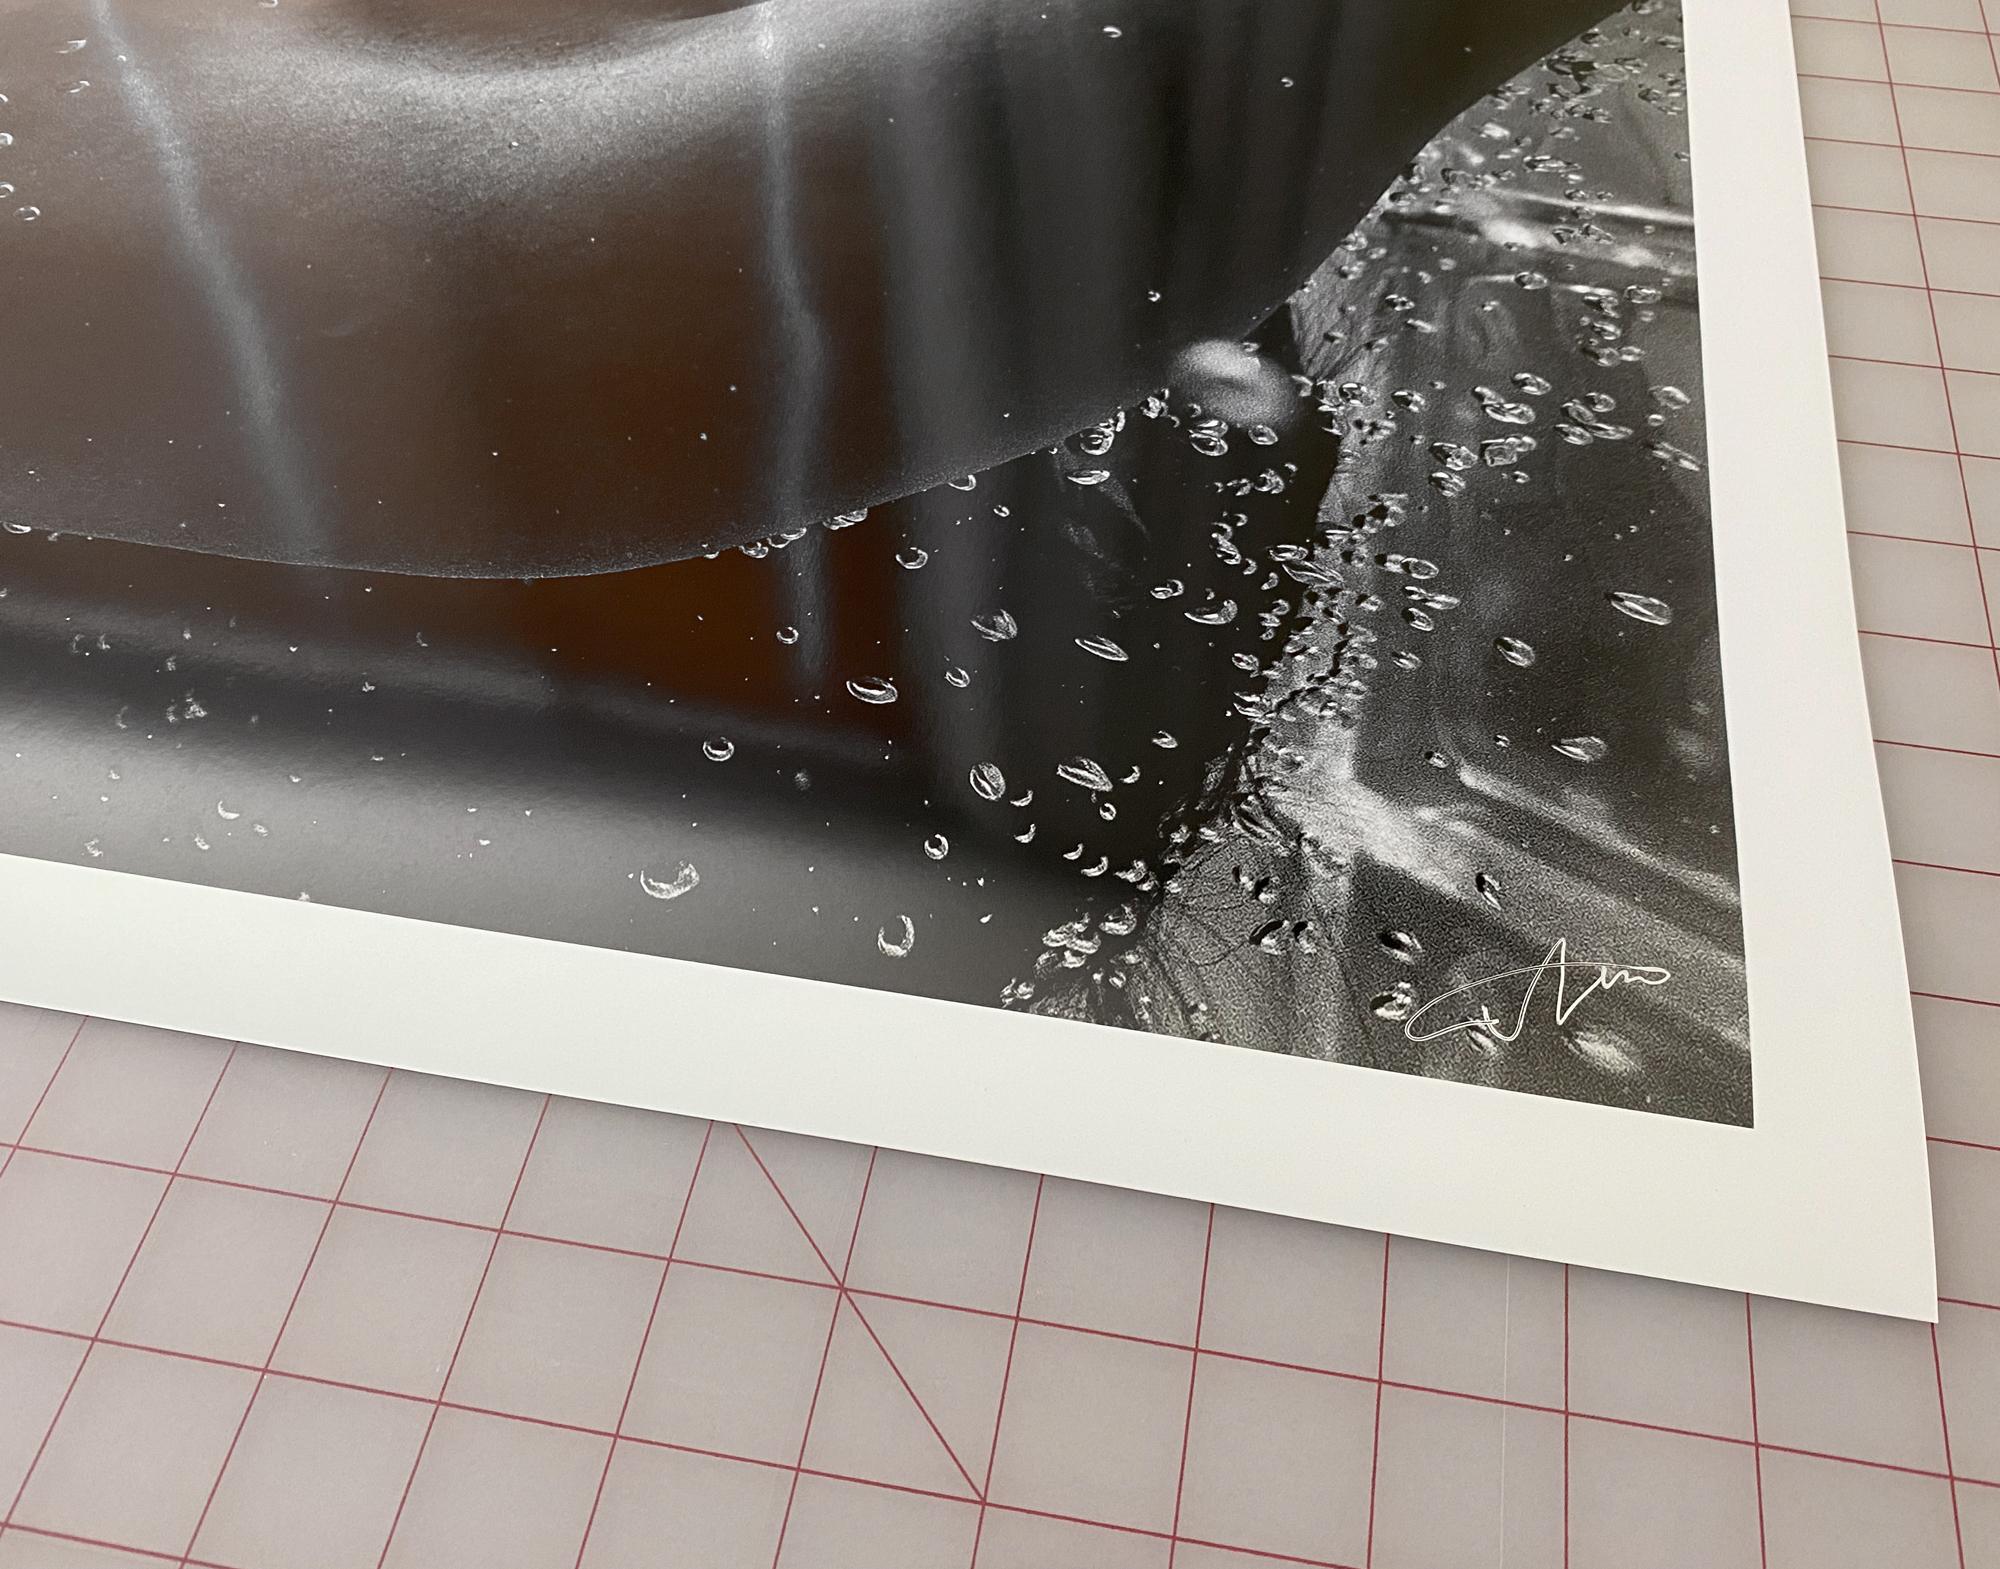 Bubbles - underwater nude b&w photograph - archival pigment print 35 x 52